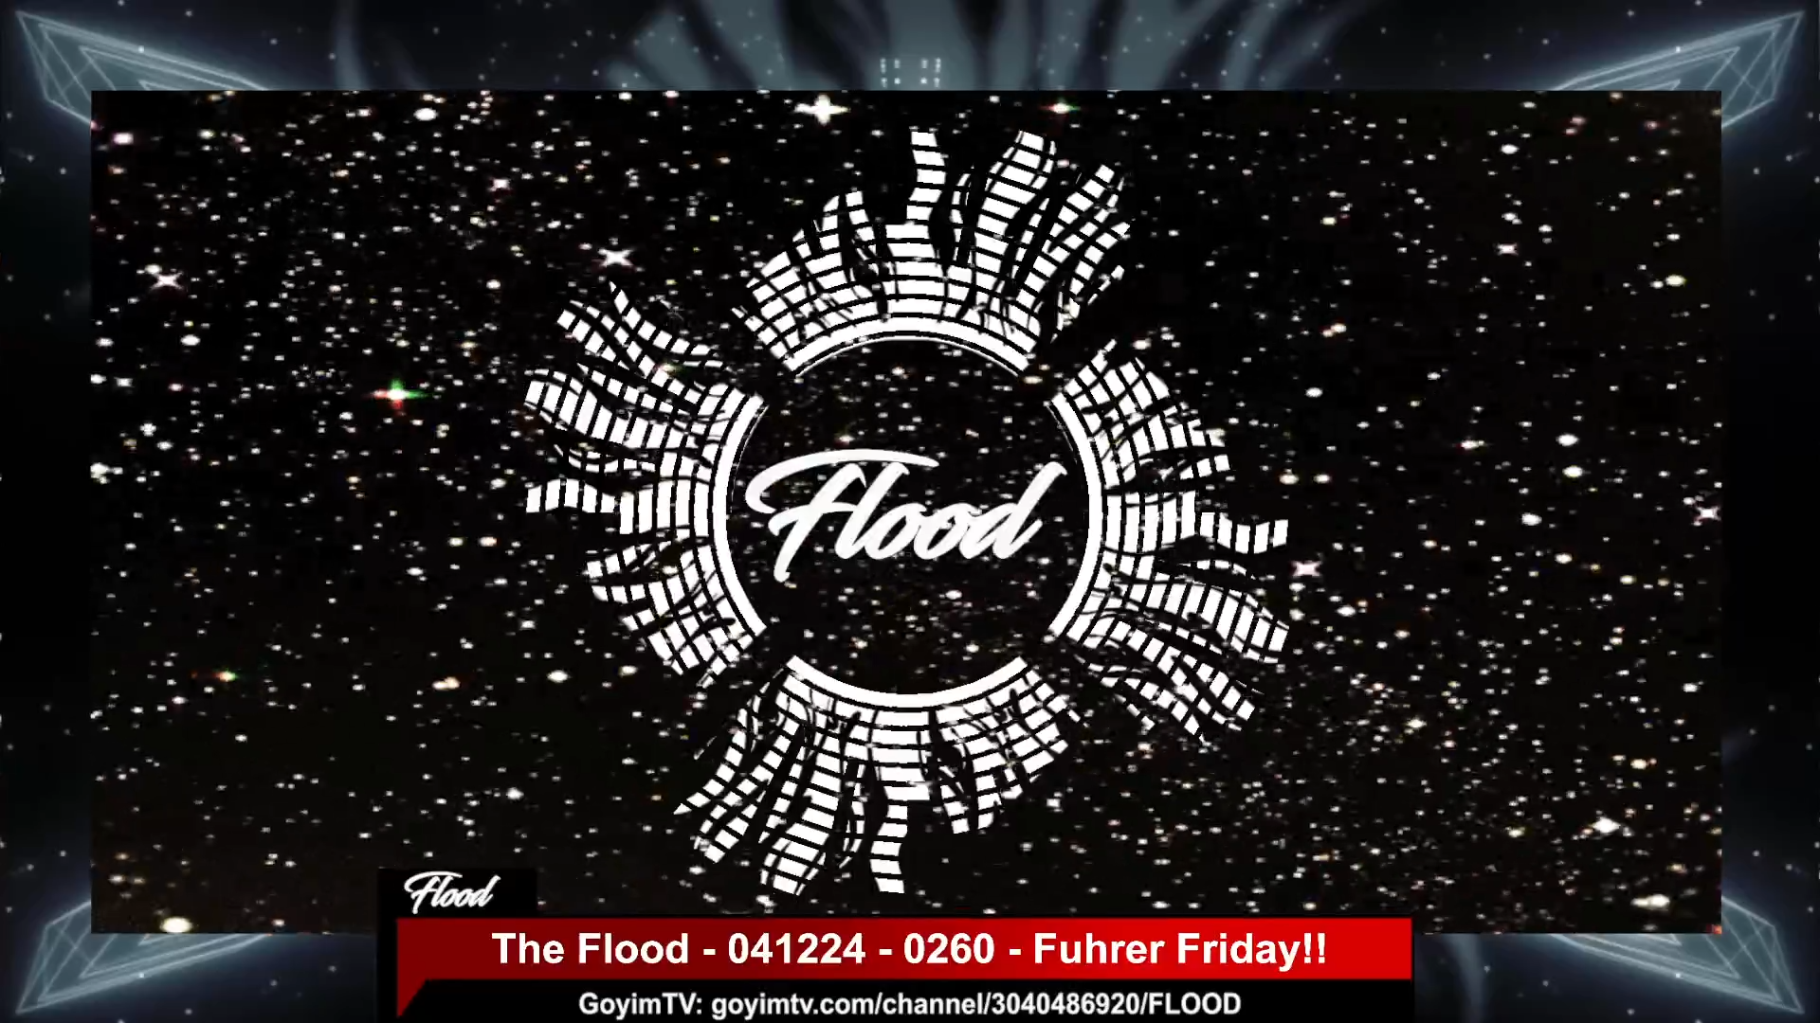 The Flood - 041224 - 0260 - Fuhrer Friday